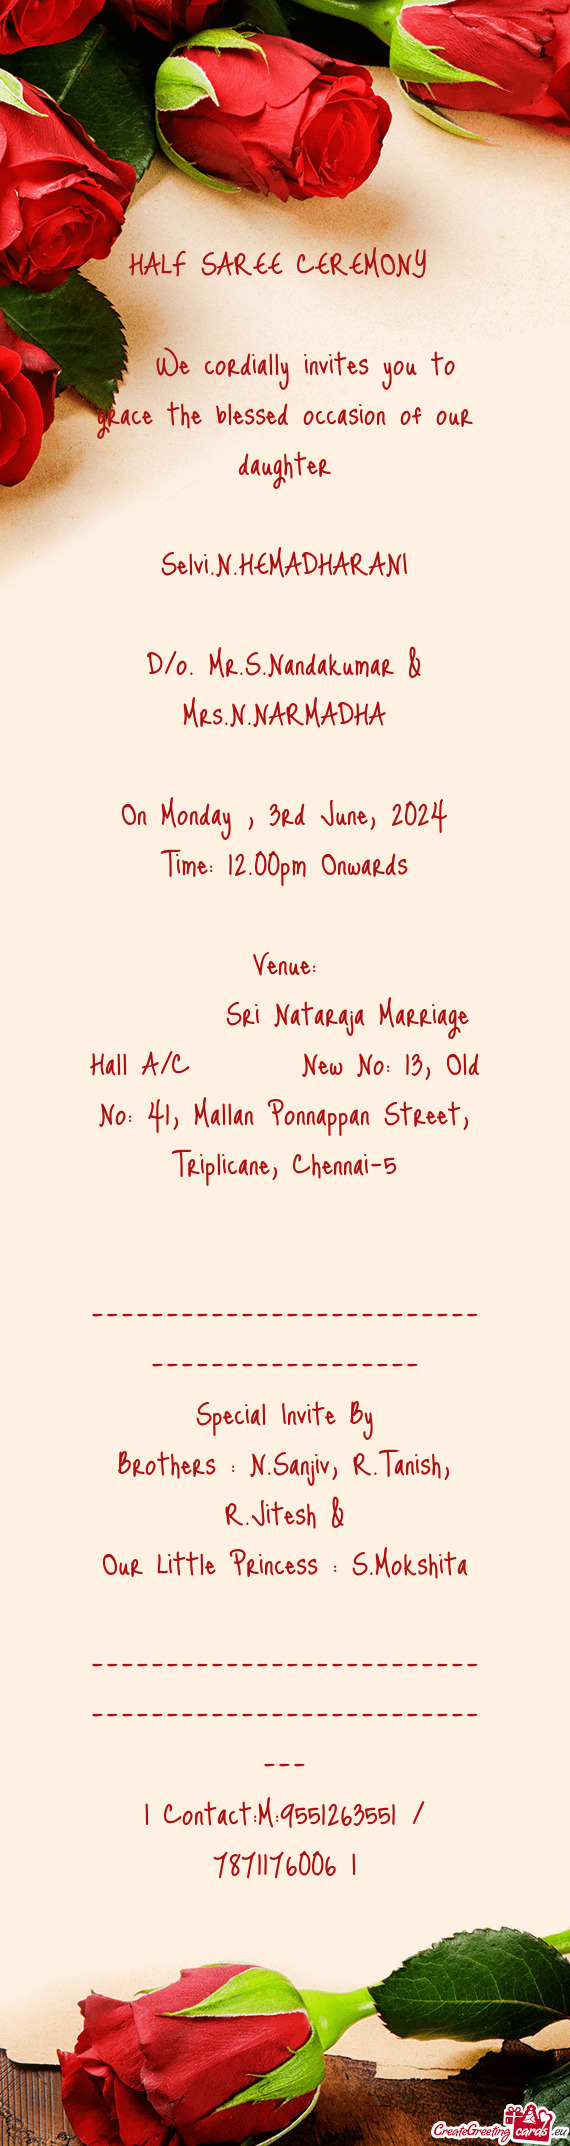 Sri Nataraja Marriage Hall A/C  New No: 13, Old No: 41, Mallan Ponnappan Street, Trip